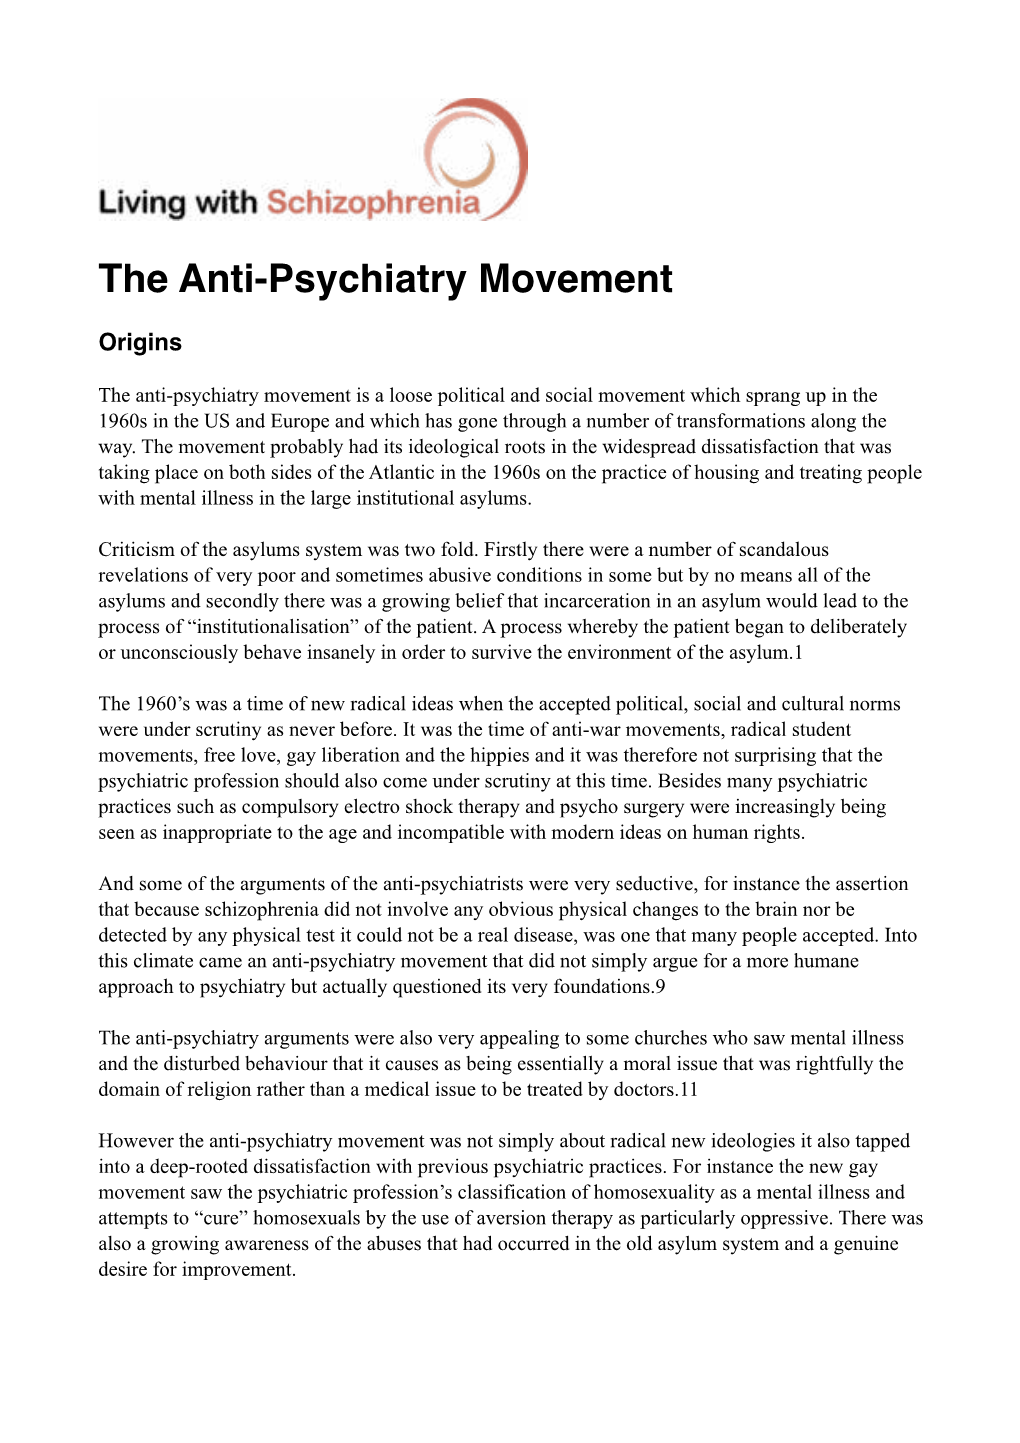 The Anti-Psychiatry Movement